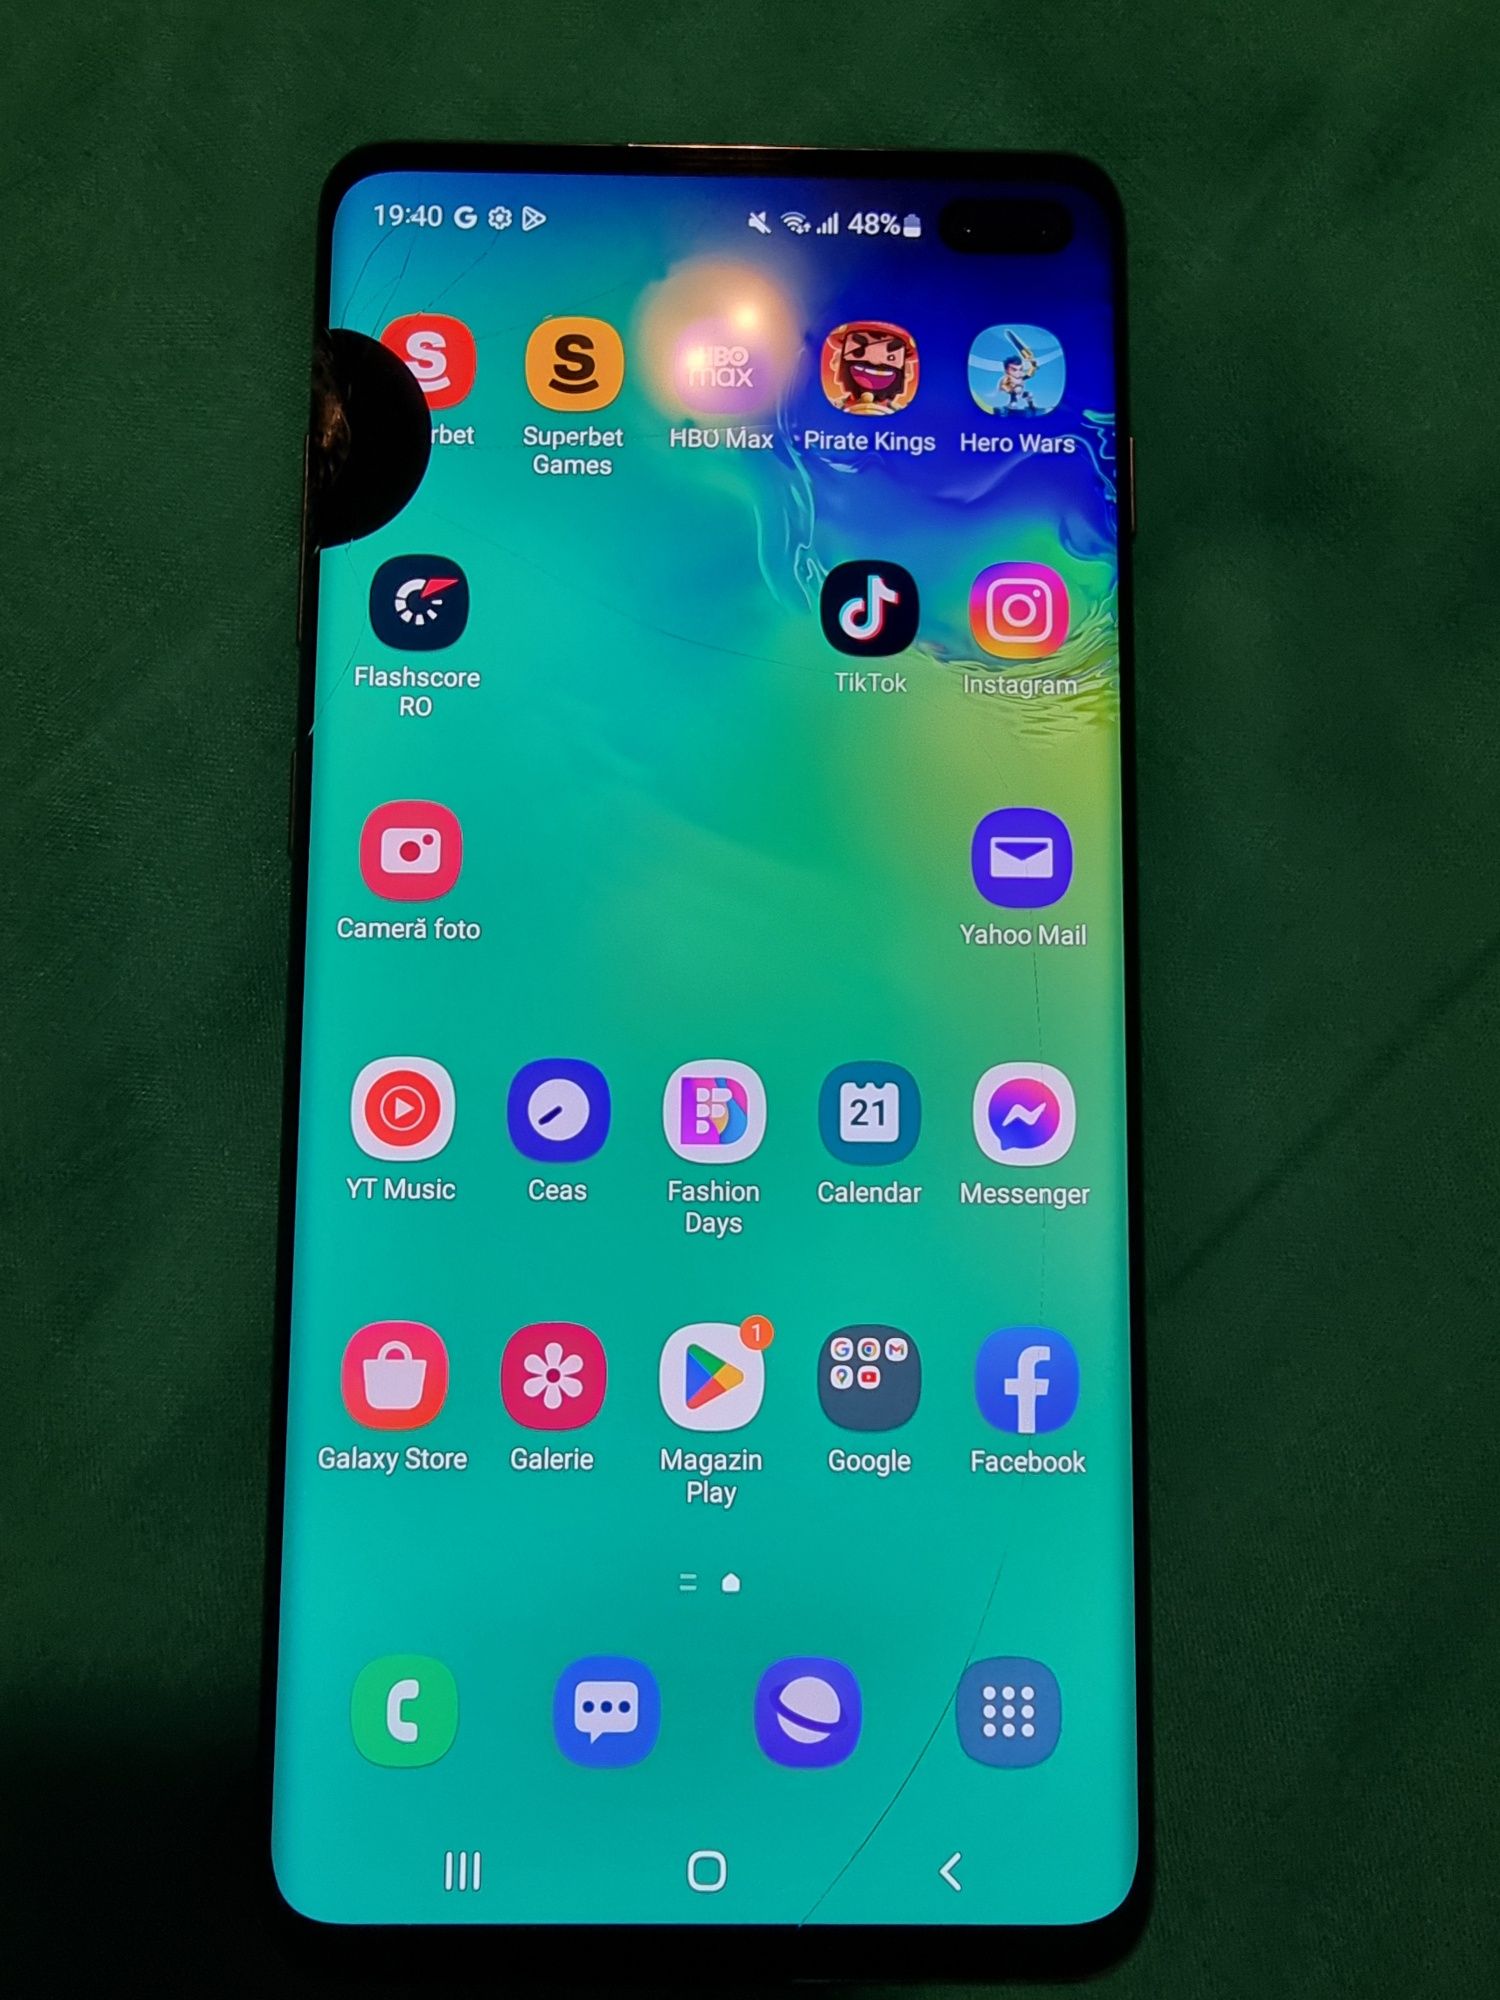 Samsung s10 plus duos defect